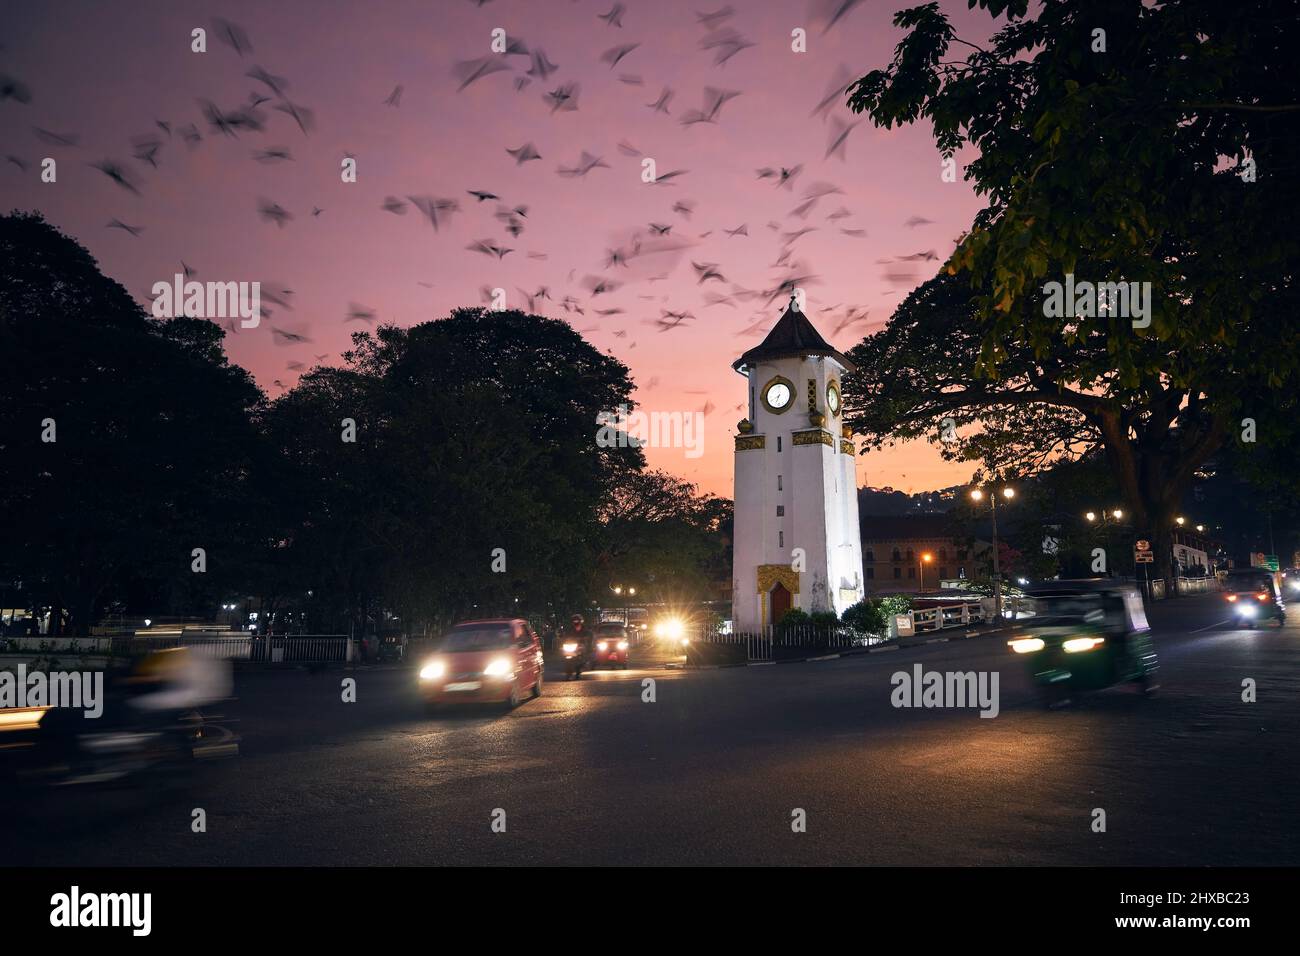 Flock of birds on sky above city at dusk. Traffic around clock tower on street in Kandy, Sri Lanka. Stock Photo